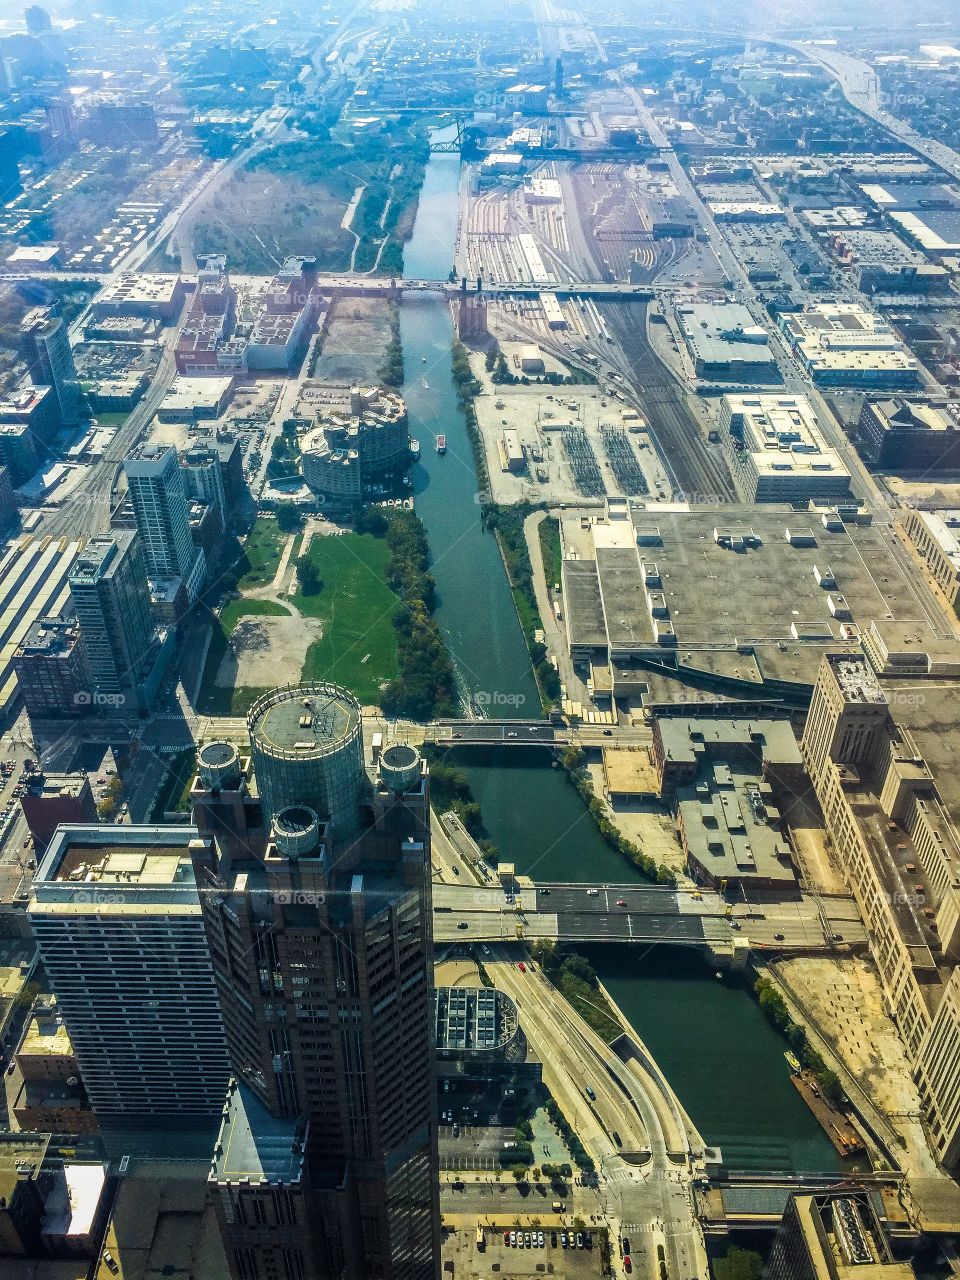 1,450 feet above Chicago